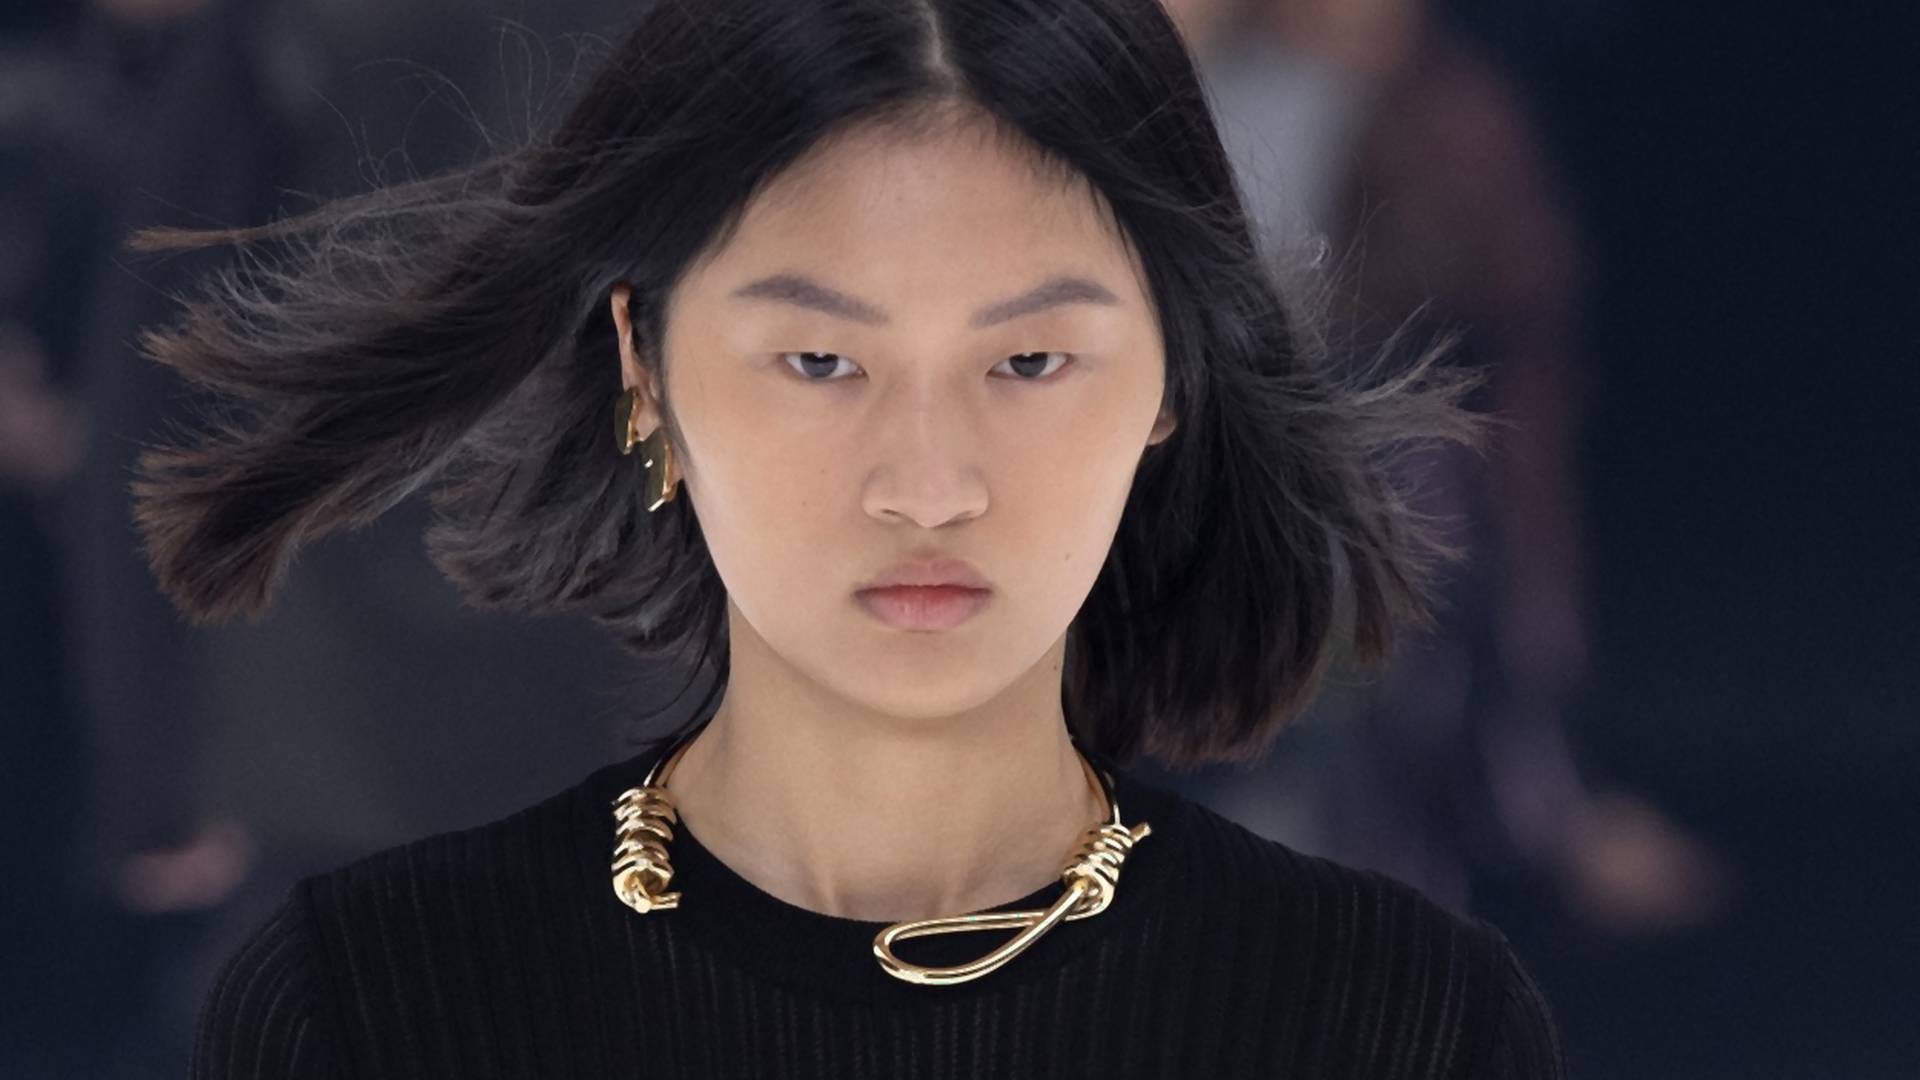 Manekenkama omča oko vrata - Givenchy ogrlica u epicentru kontroverze